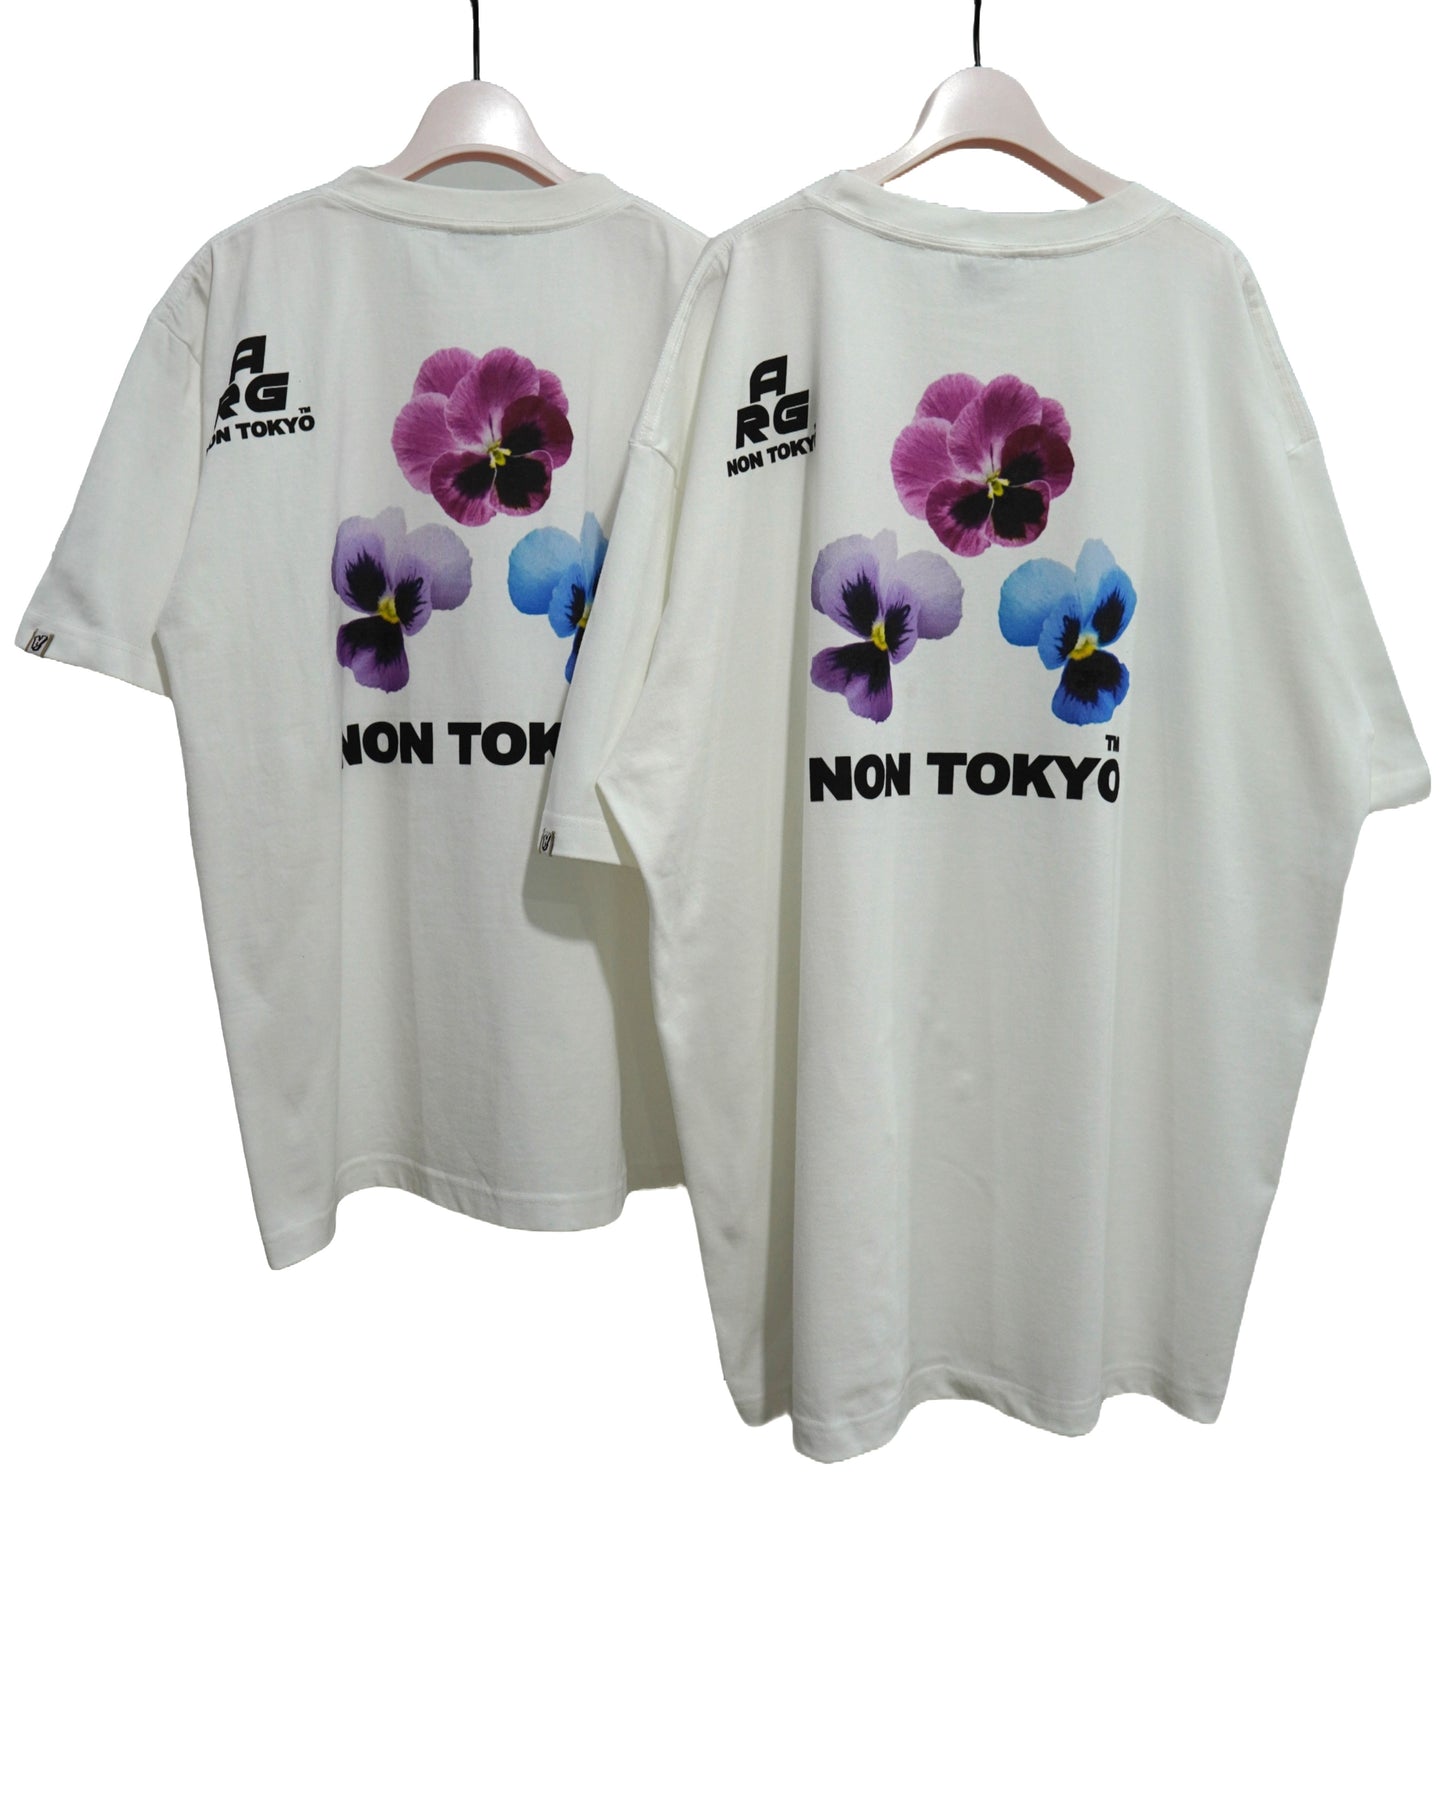 NON TOKYO /  PRINT T-SHIRT (PANSY / WHITE) / 〈ノントーキョー〉プリントTシャツ (パンジー / ホワイト)